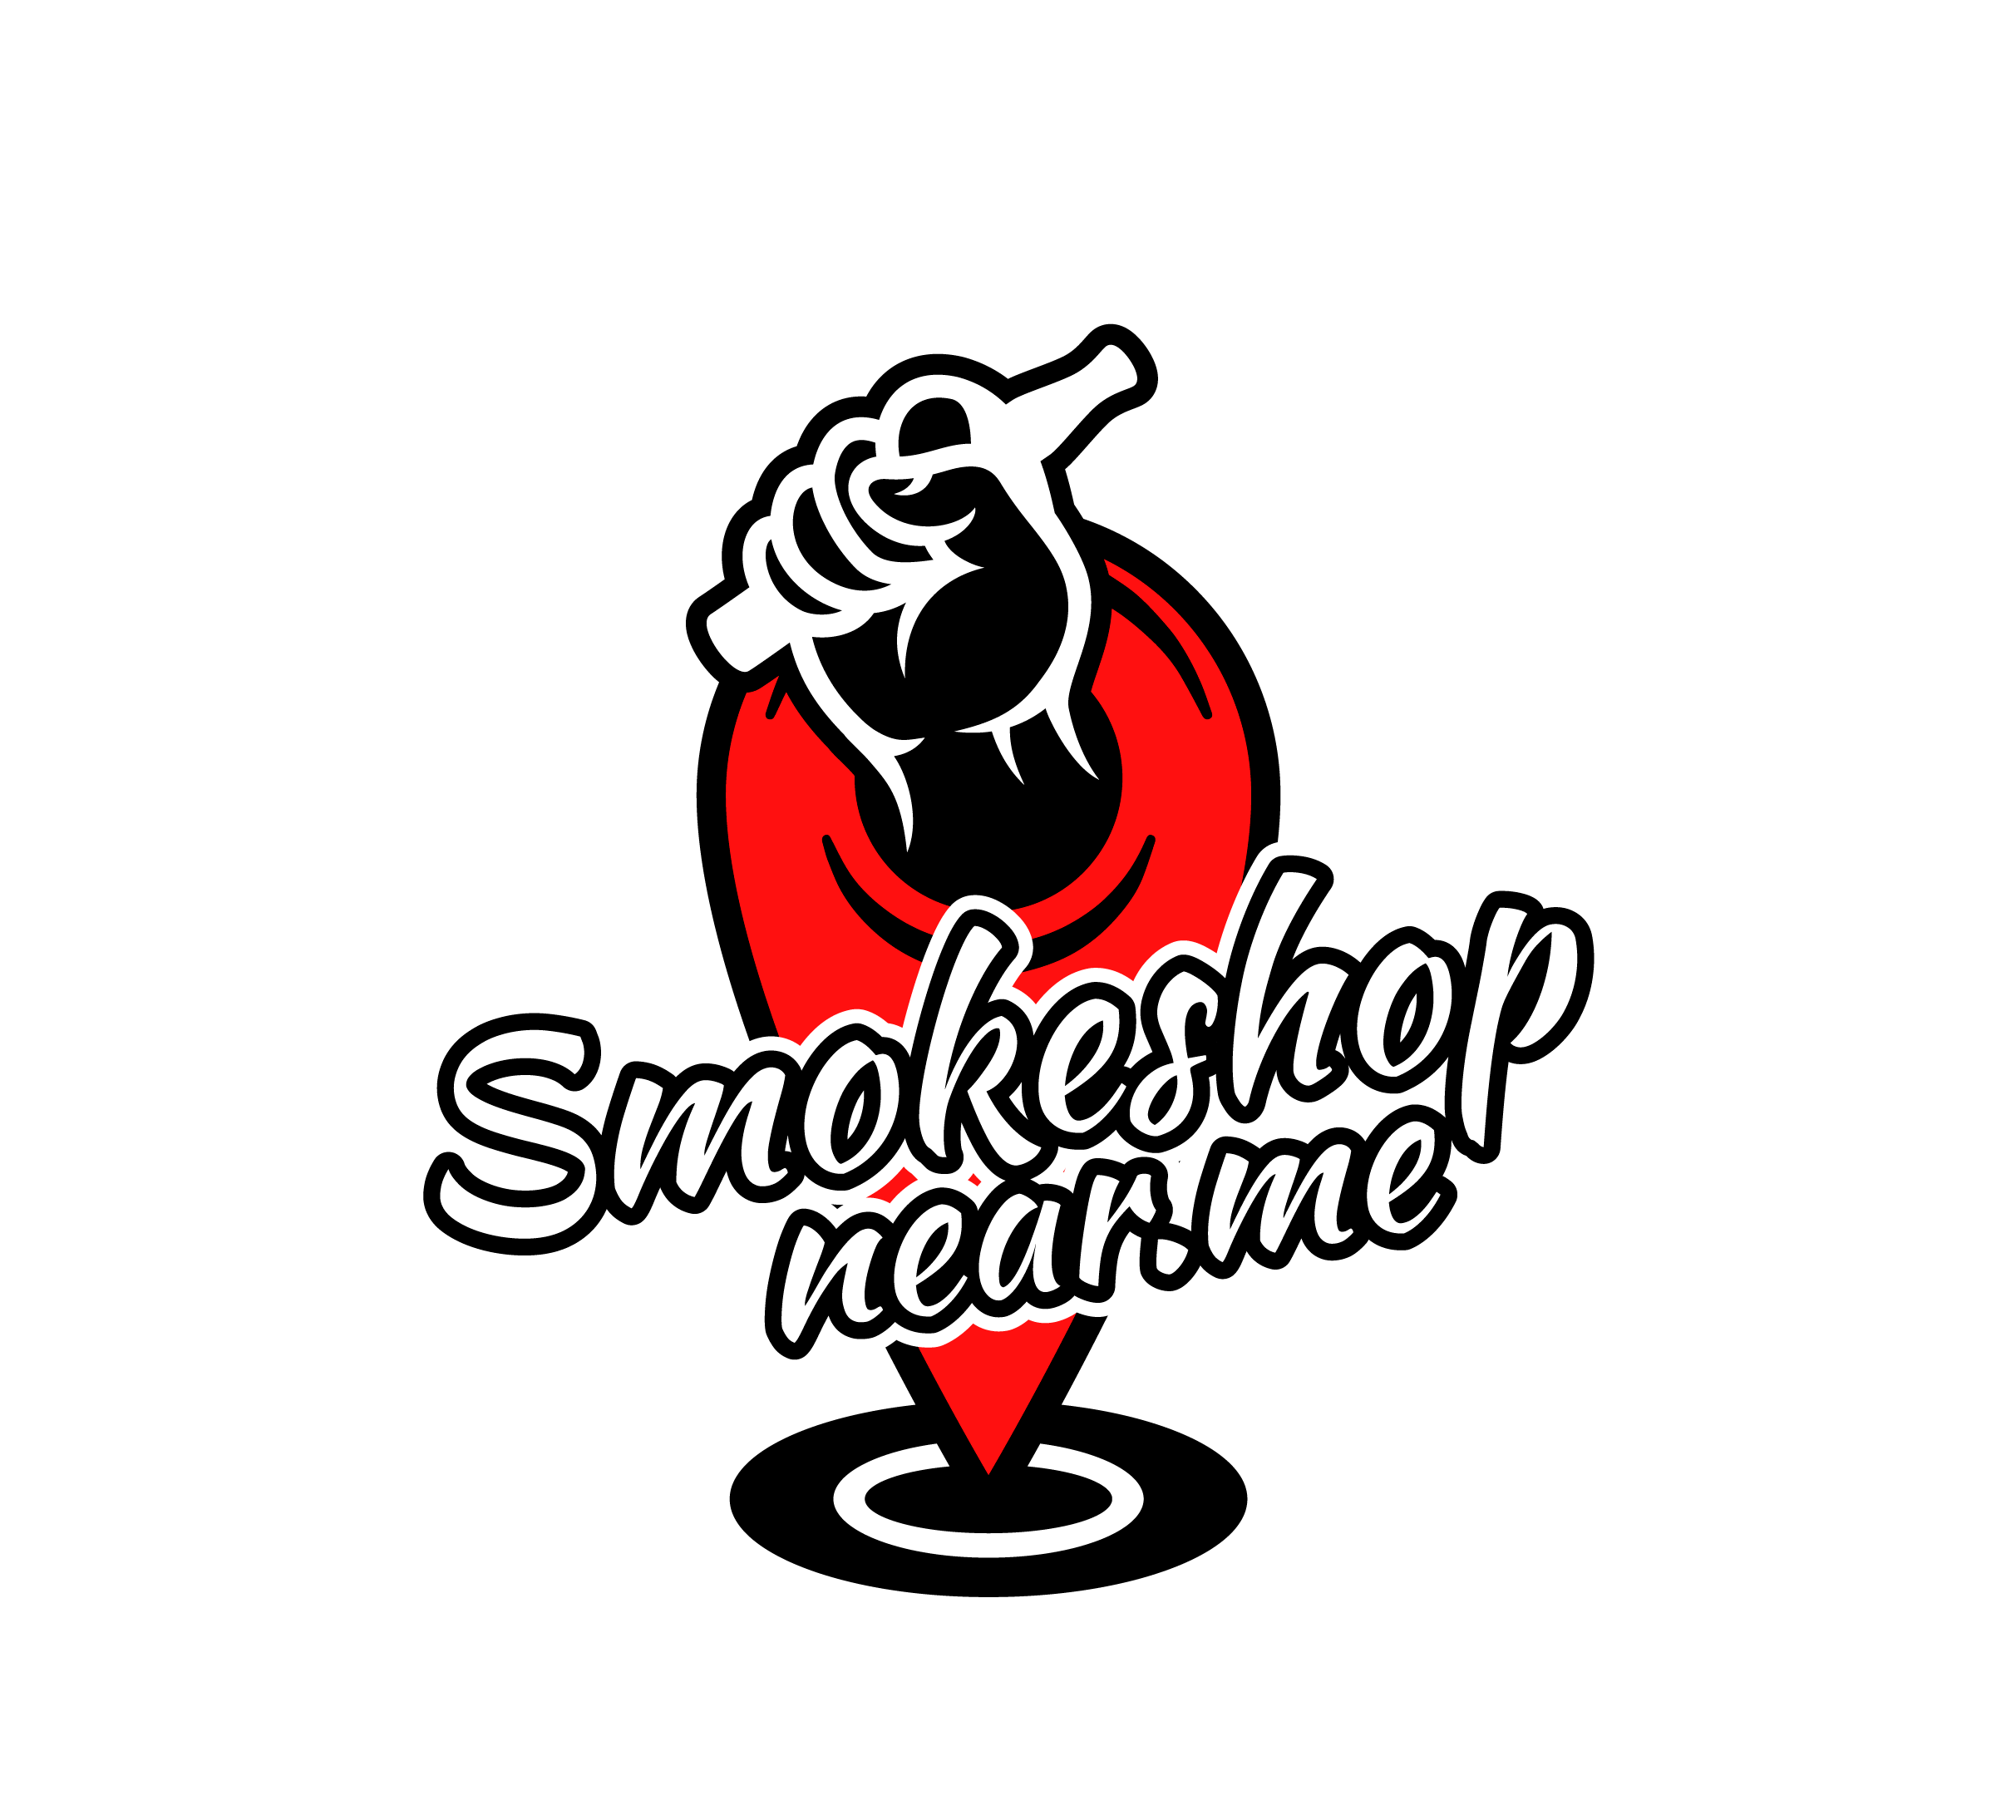 Churchill Tobacco And Vape - Smokeshopnear.me